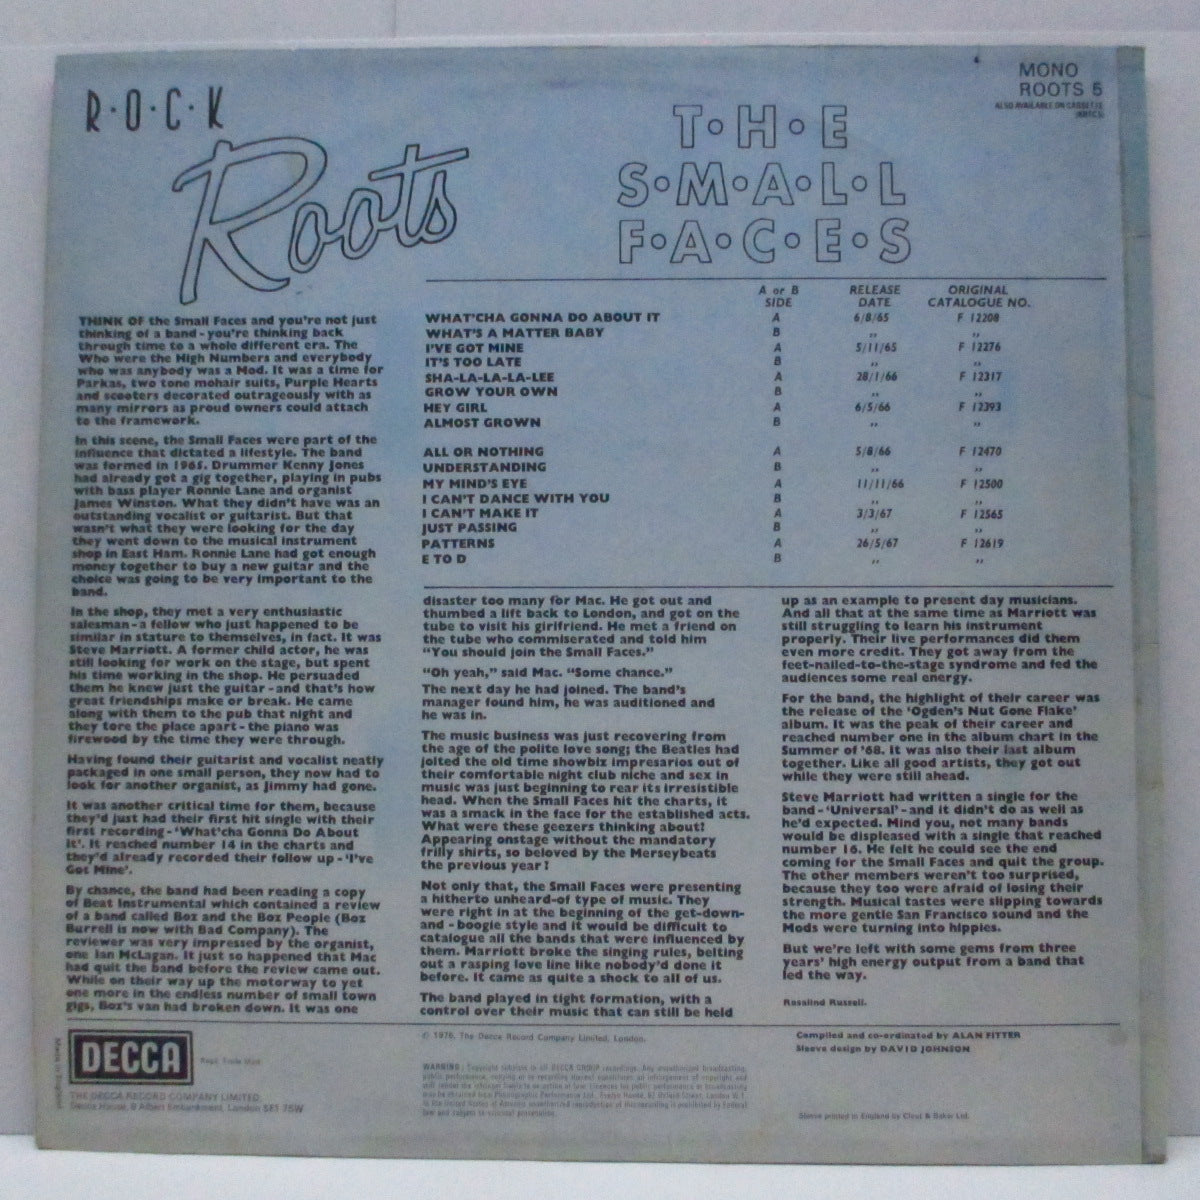 SMALL FACES (スモール・フェイセス)  - Rock Roots : The Singles Album - All The Decca 'A'+'B' Sides (UK オリジナル「ネイビー色ラベ・バージョン」モノラル LP /表面コーティングジャケ)